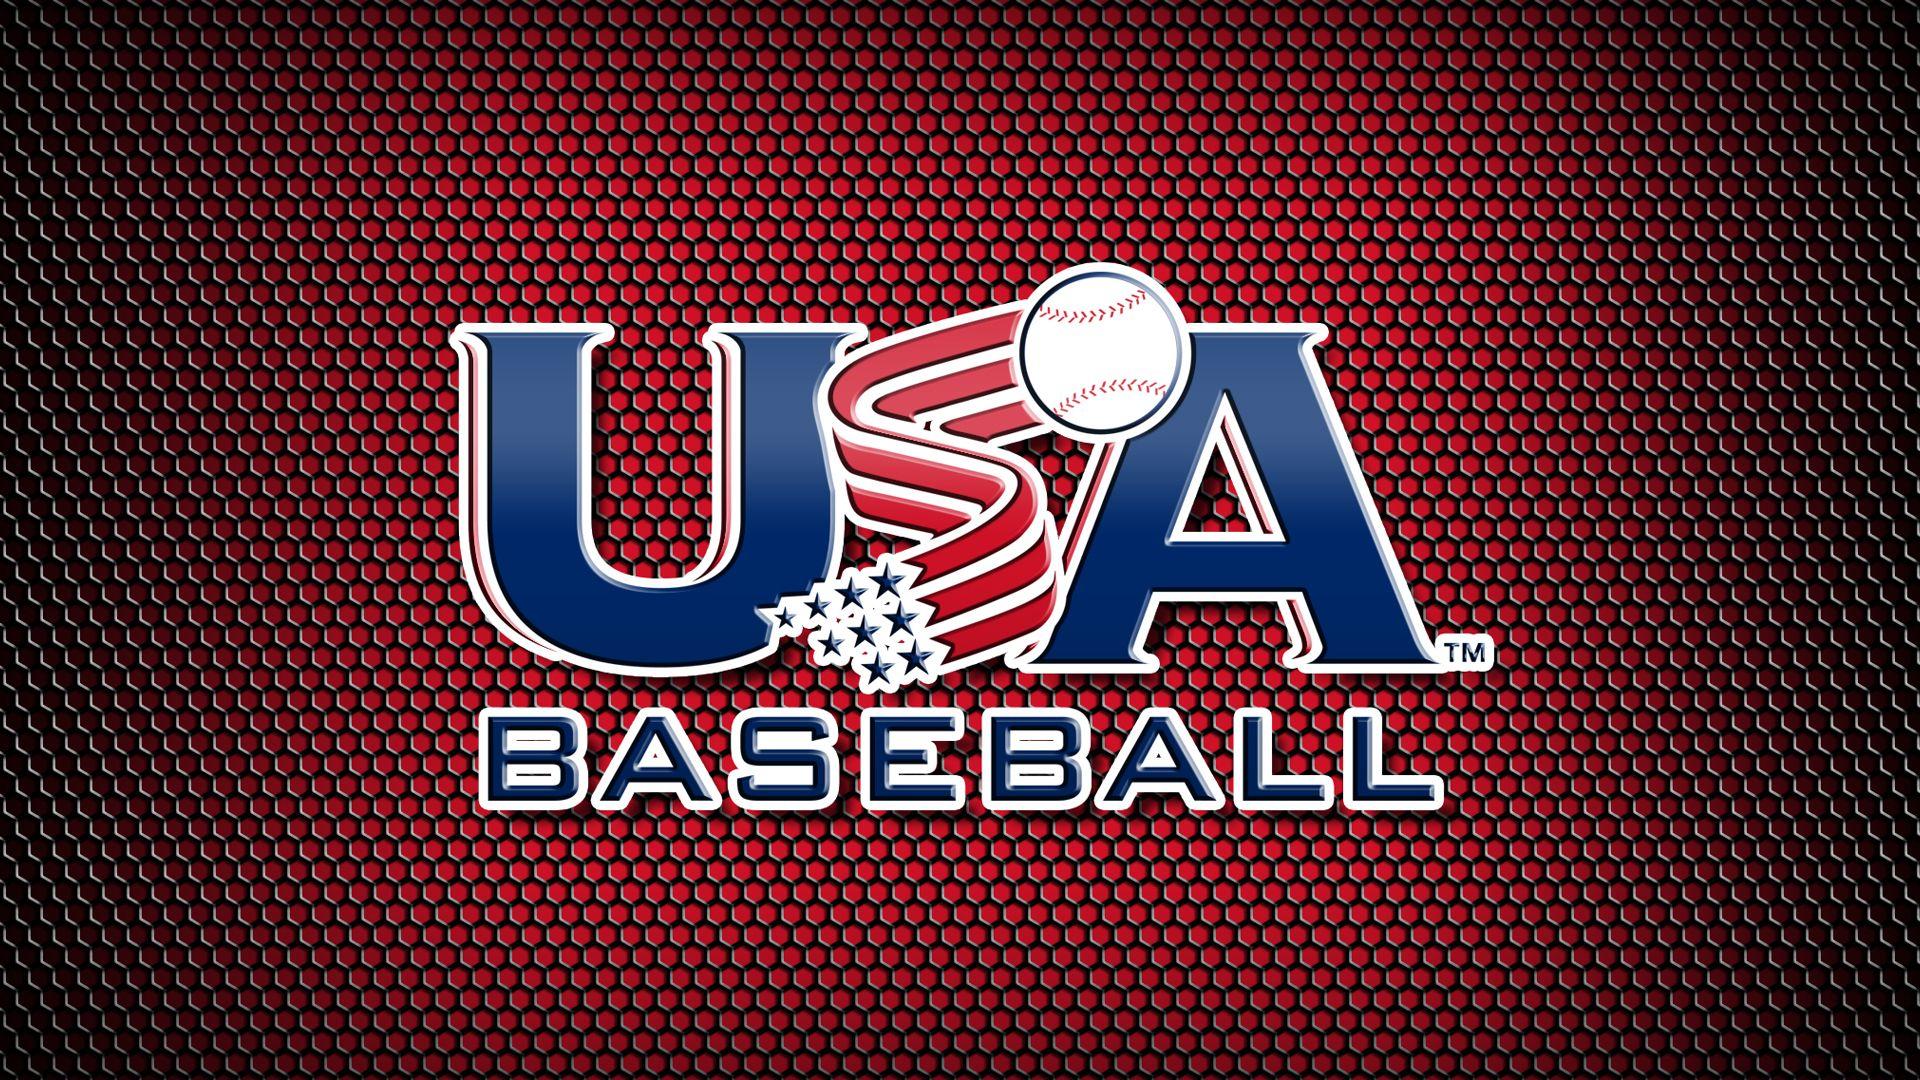 USA Baseball Computer Wallpaper, Desktop Background.15 MB